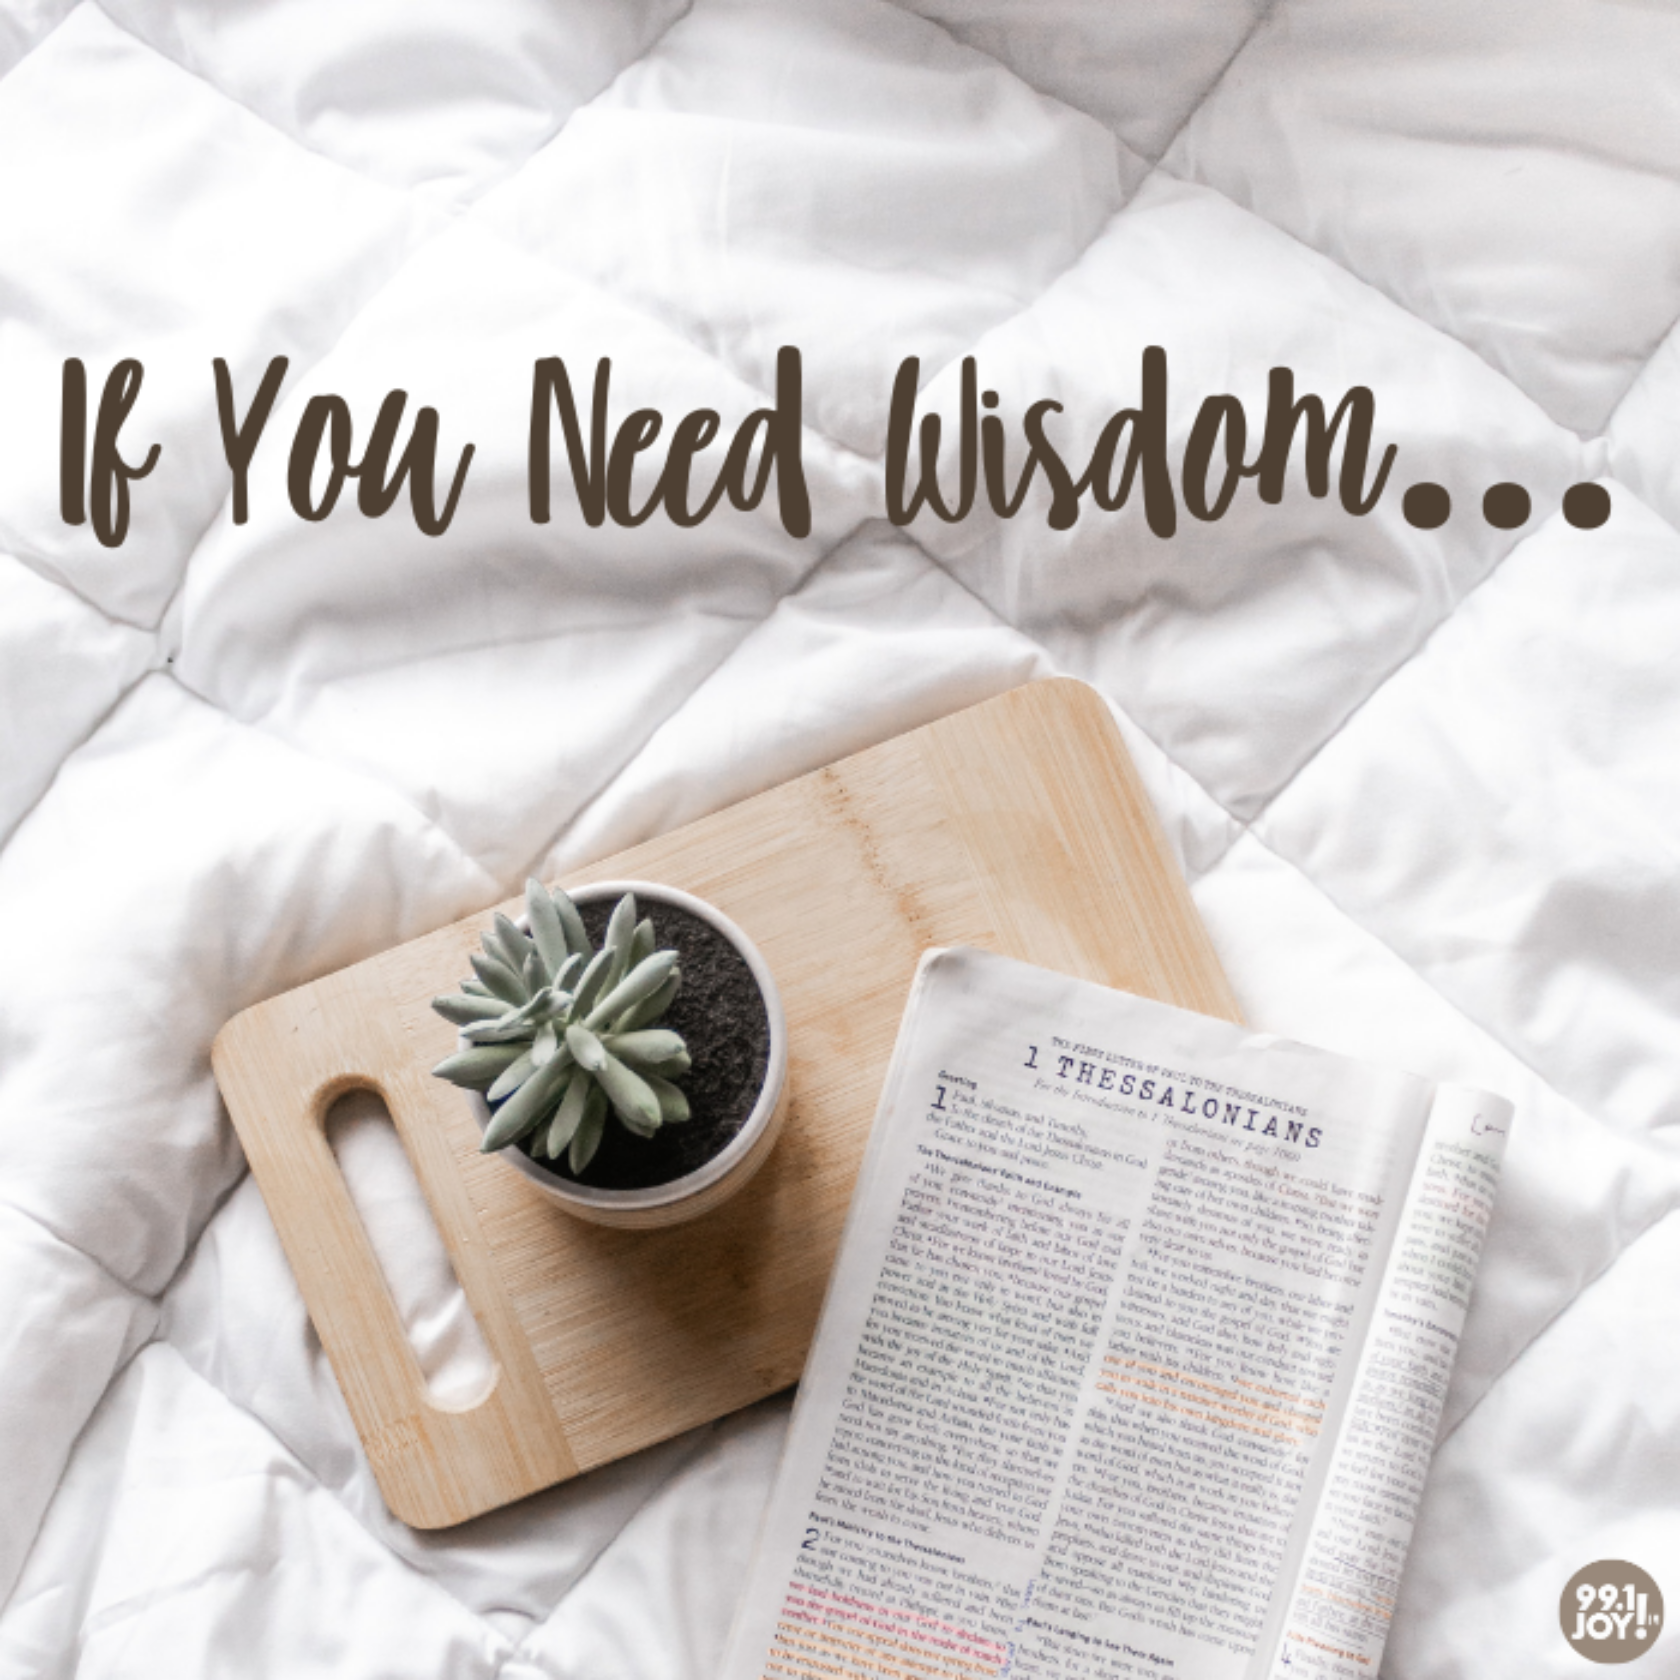 If You Need Wisdom…